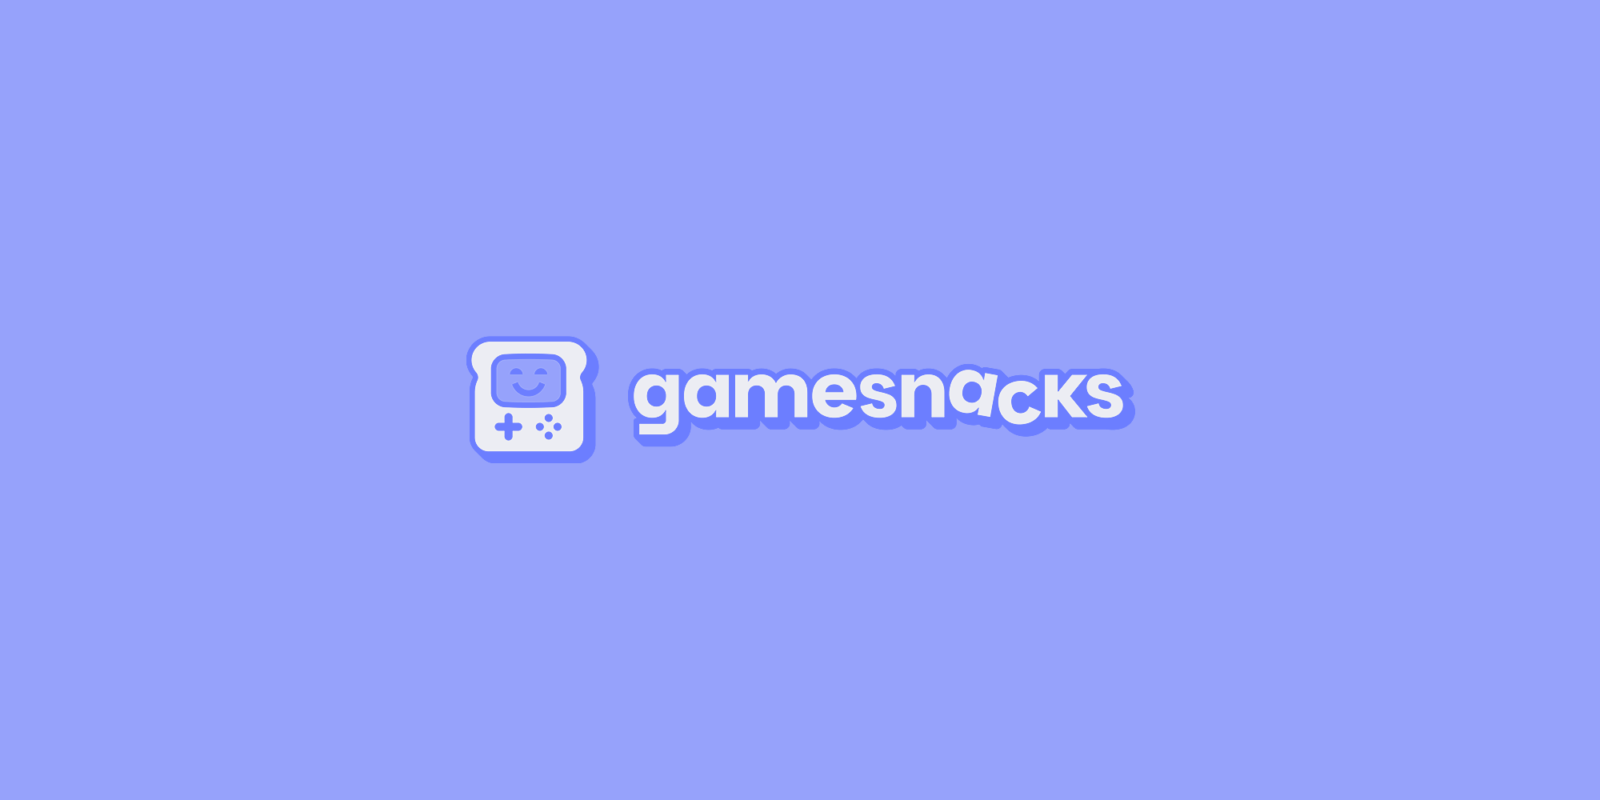 Google launches GameSnacks